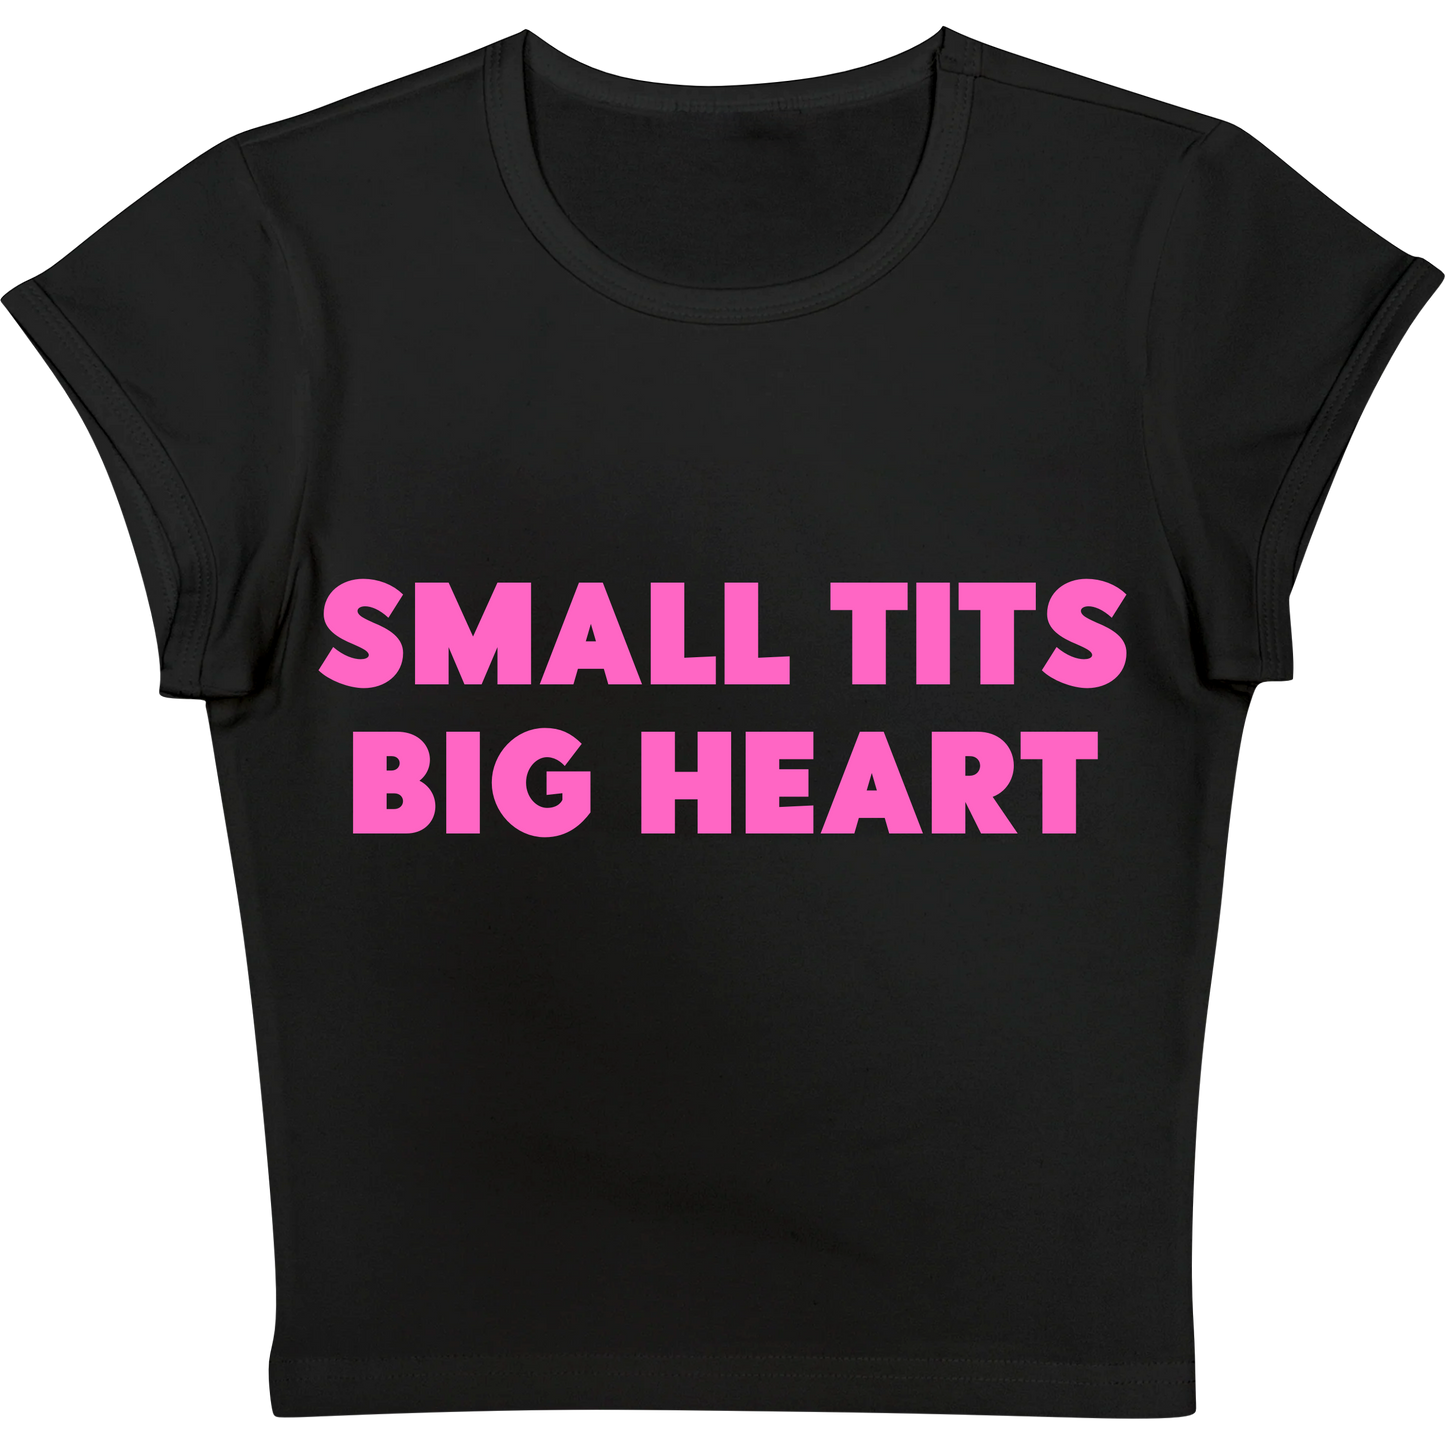 Small Tits Big Heart Baby tee